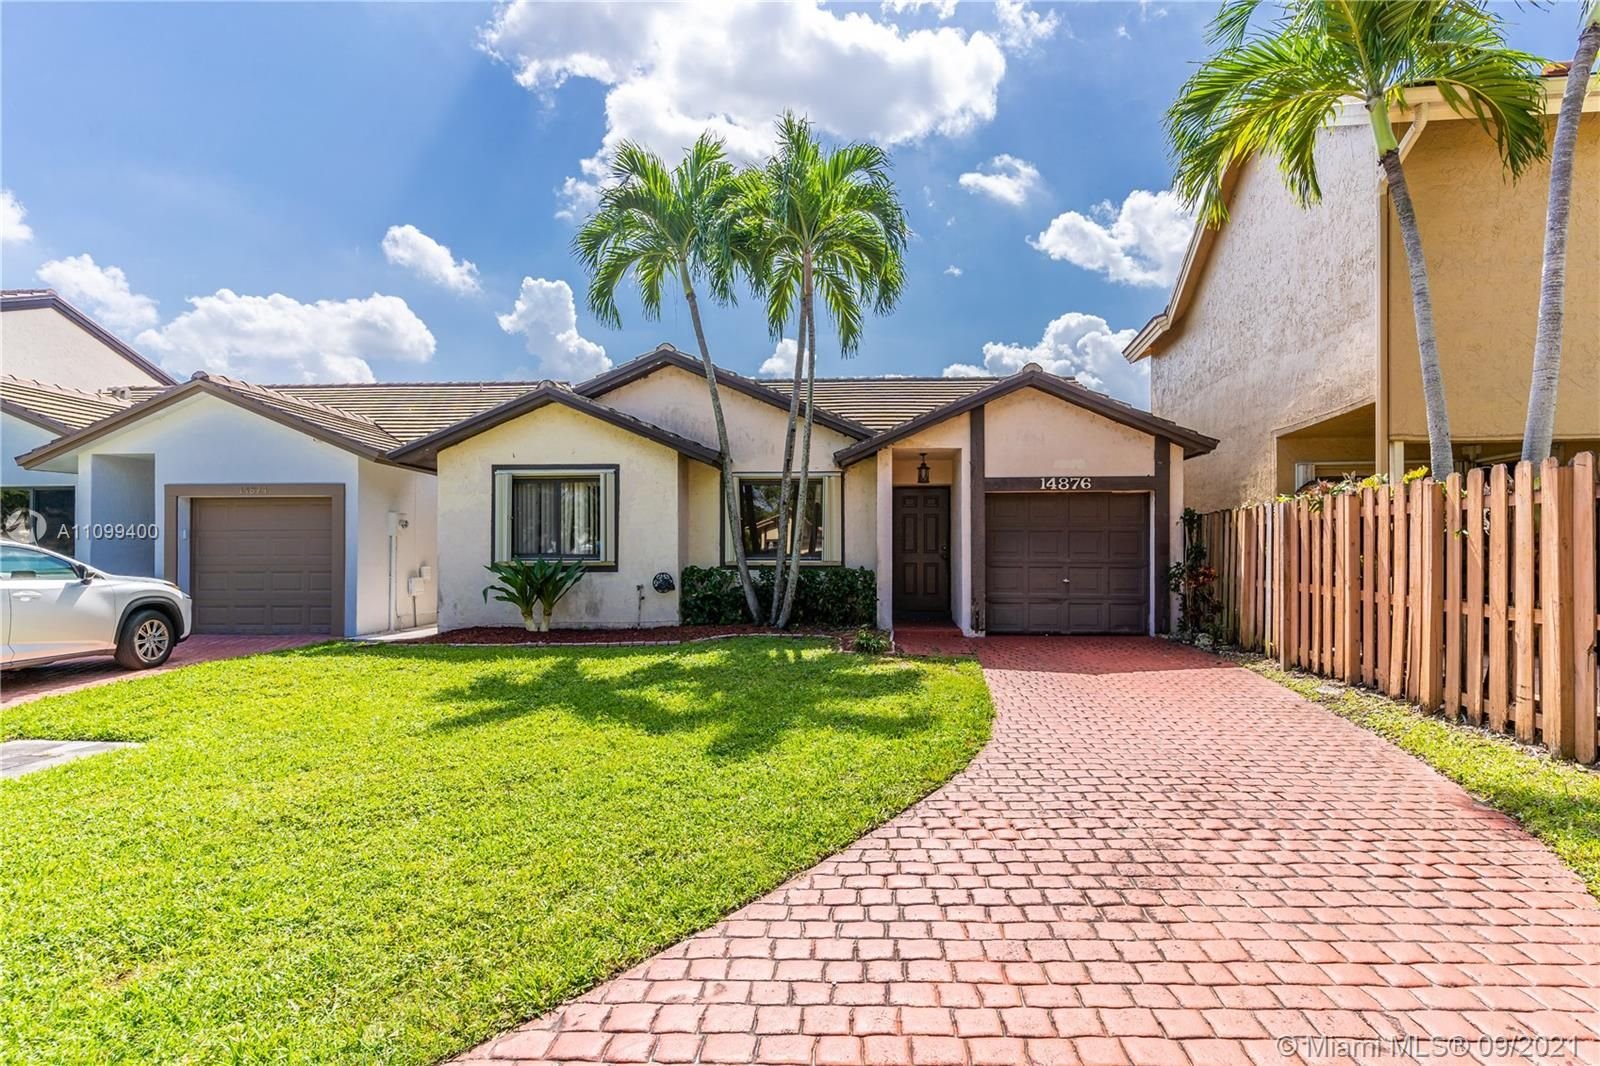 Real estate property located at 14876 96th Ter, Miami-Dade County, Miami, FL